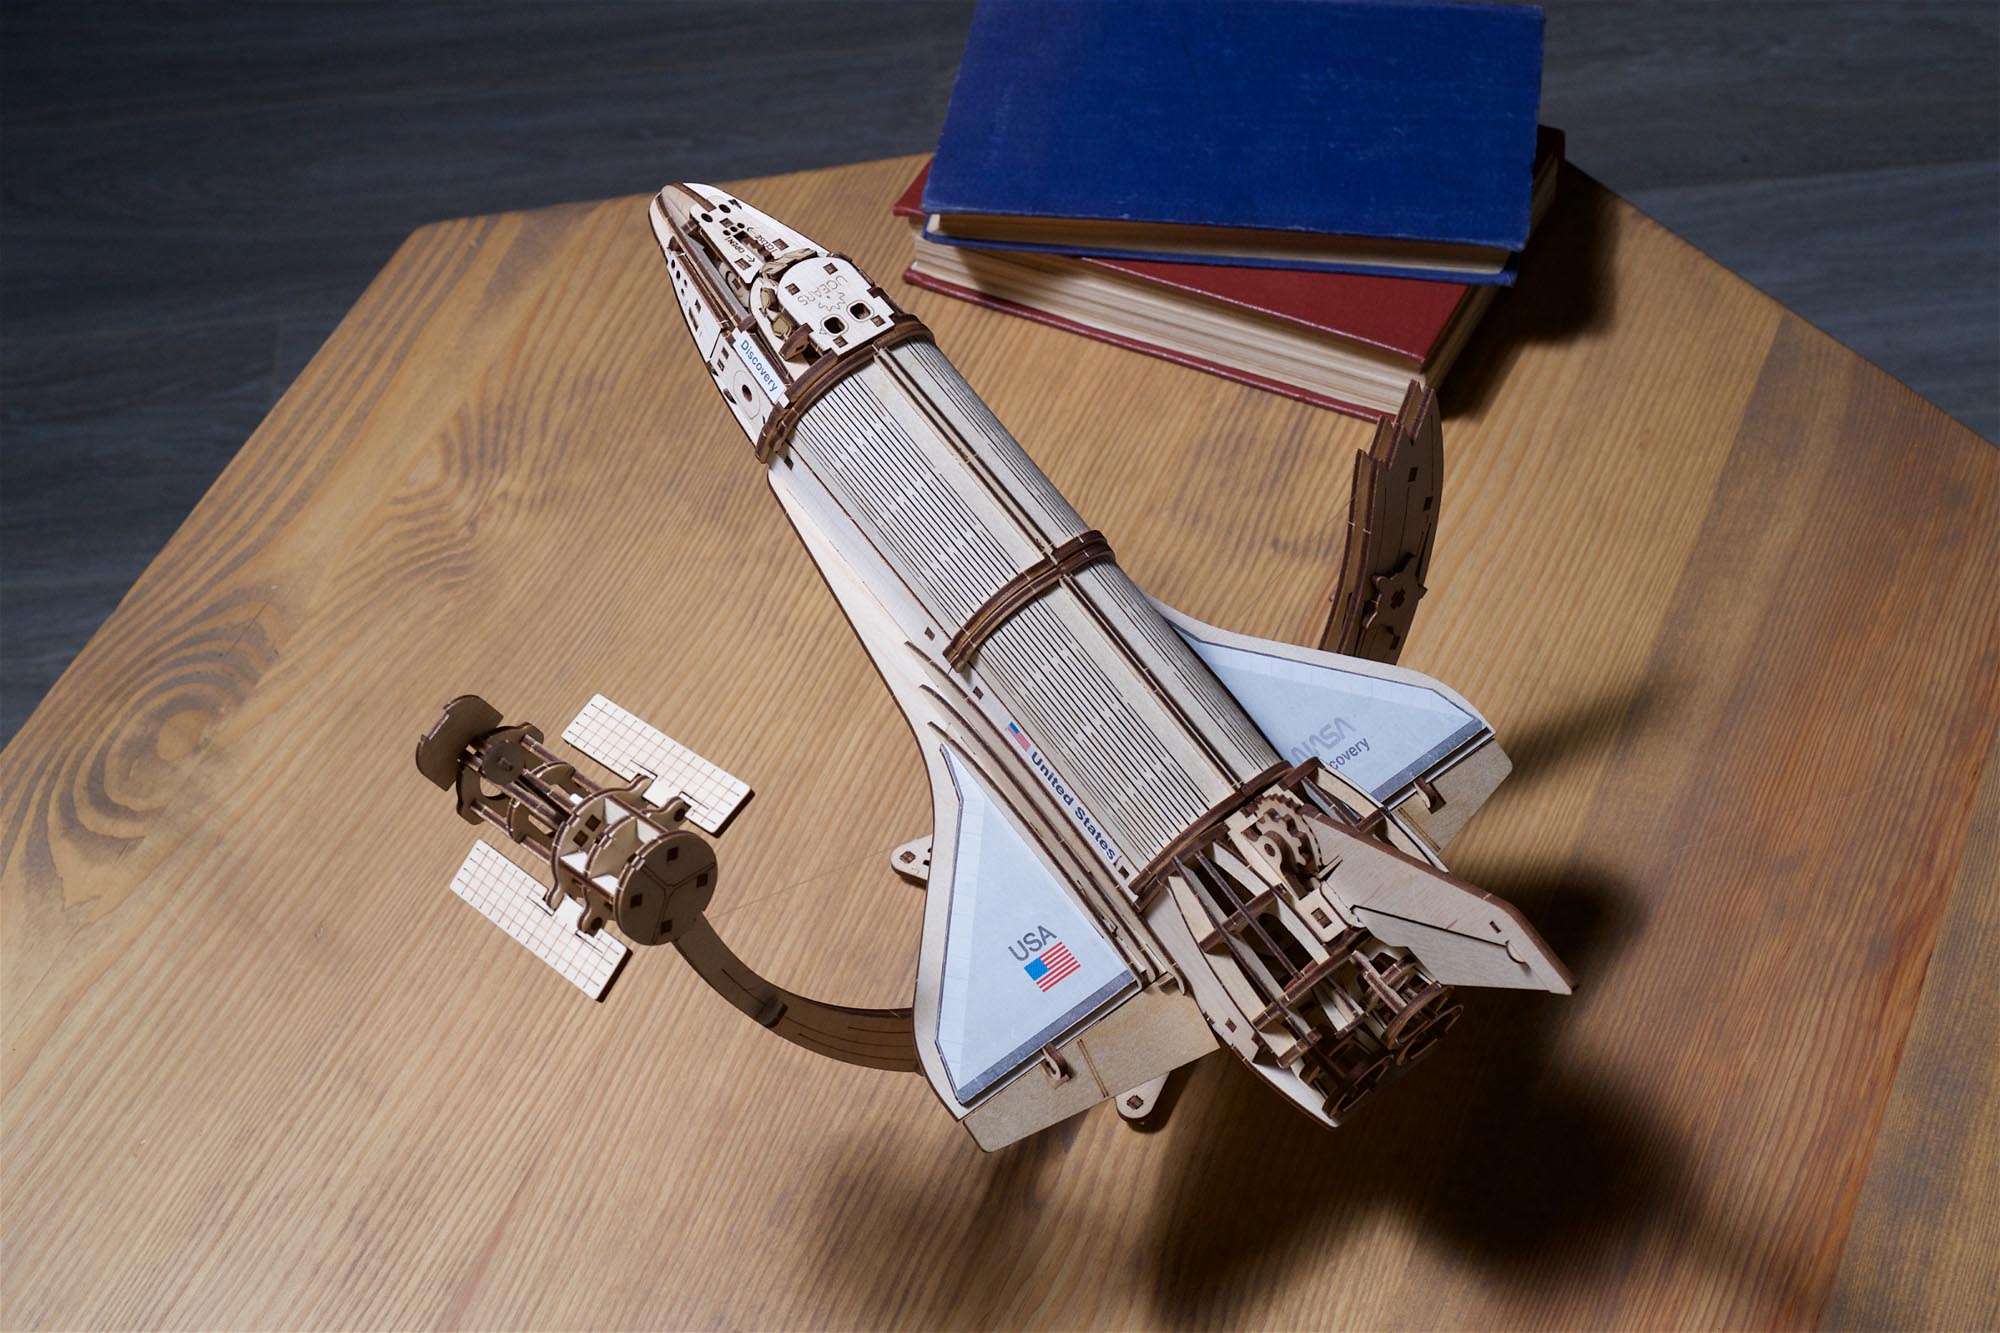 Space Shuttle Transport Kids Woodworking Kit